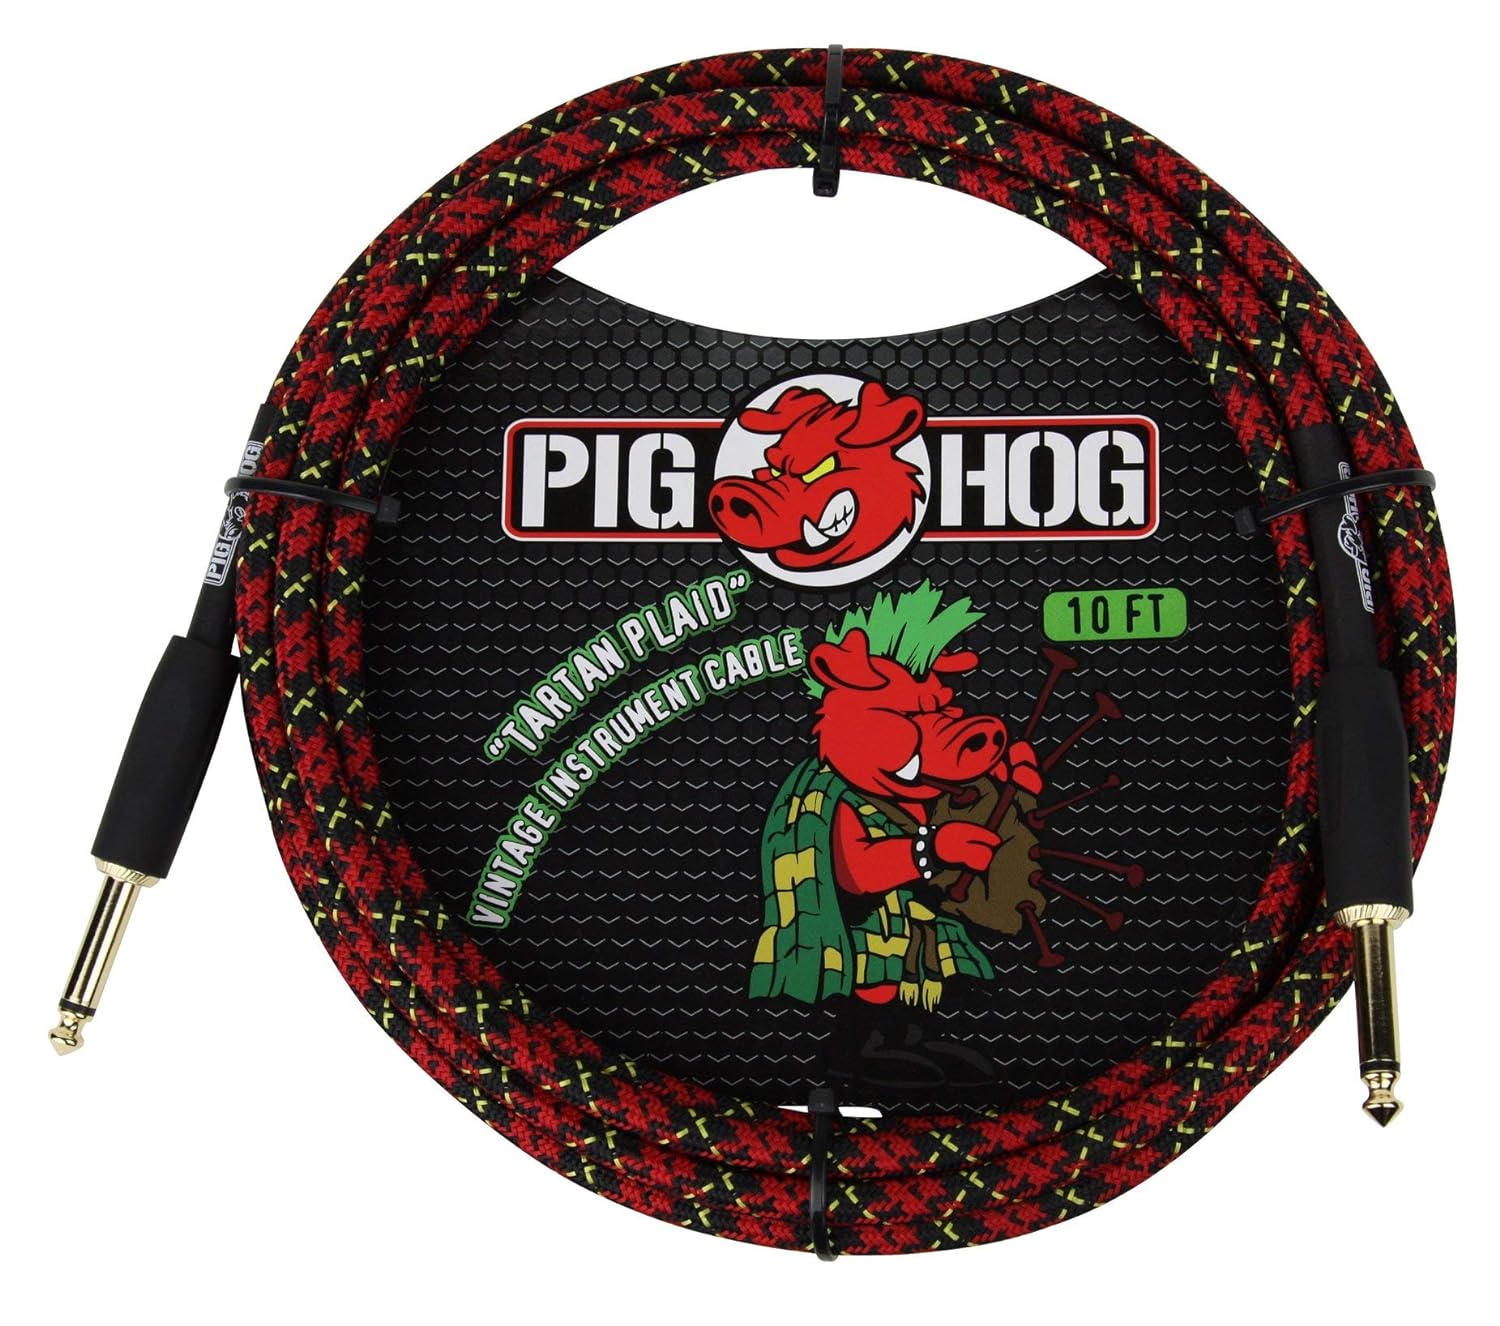 Pig Hog Instrument Cable 10 ft. Tartan Plaid